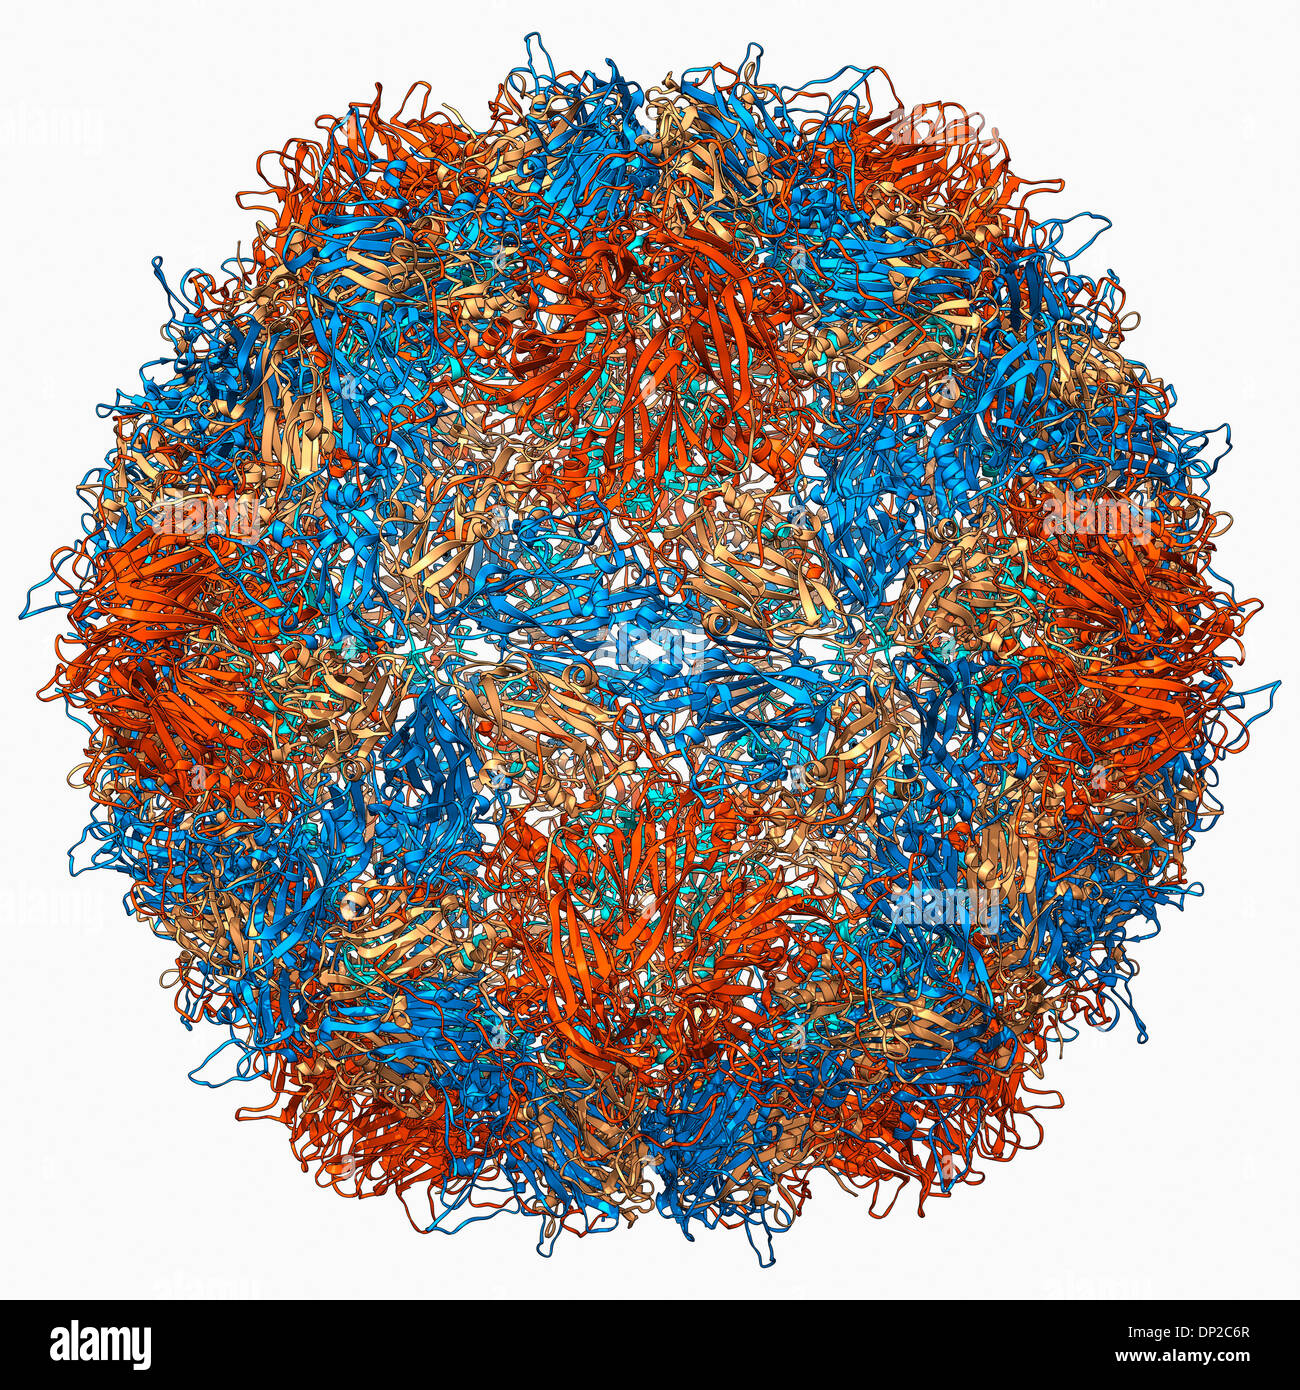 Poliovirus type 3 capsid, molecular model Stock Photo